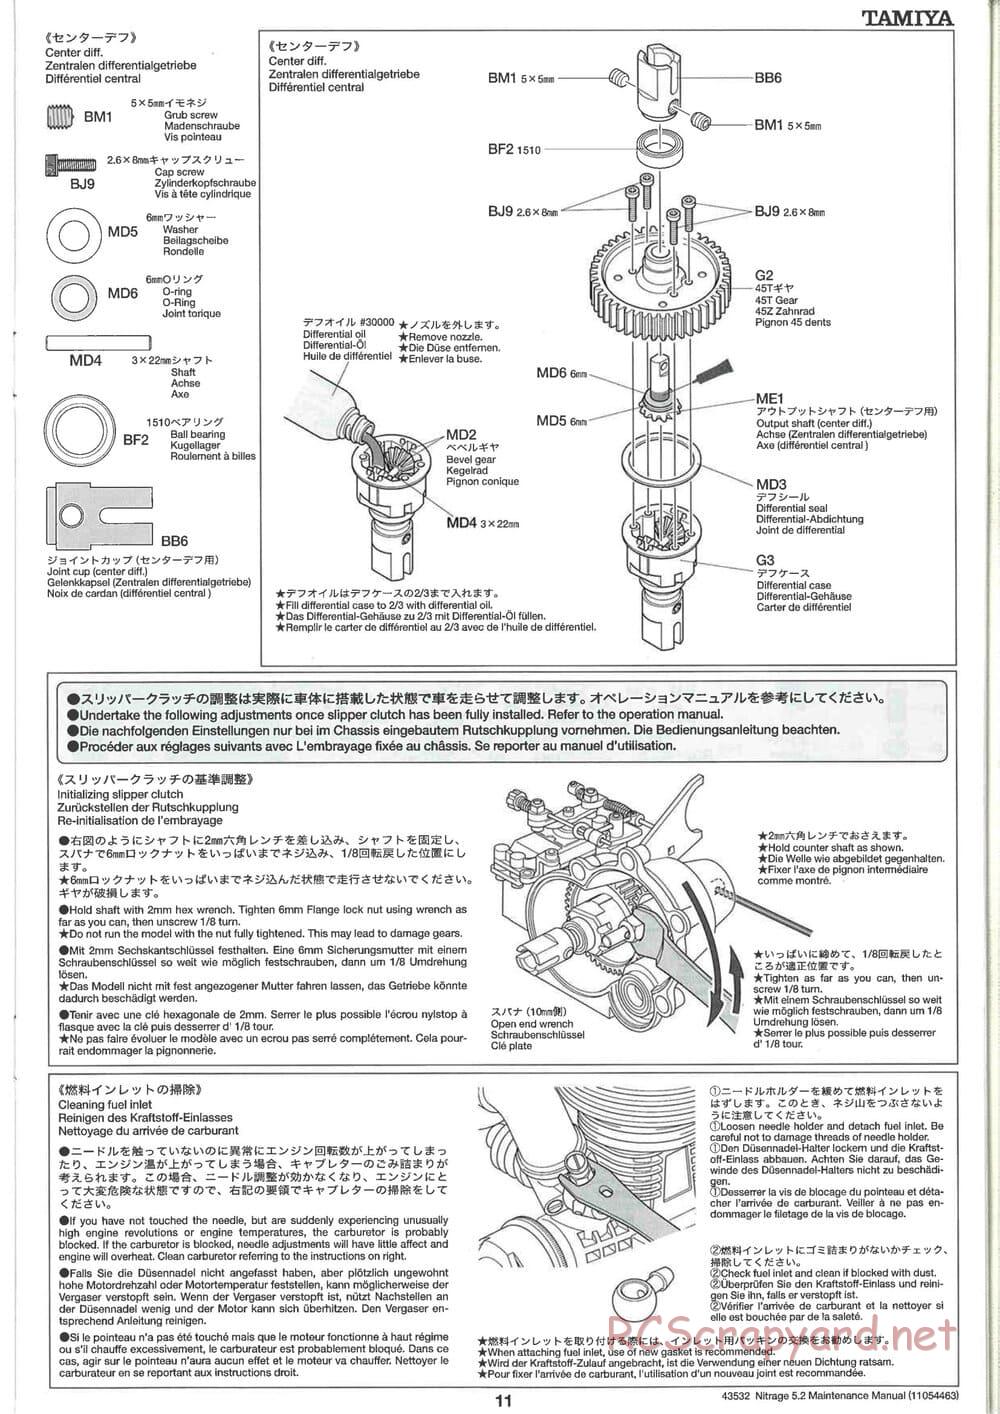 Tamiya - Nitrage 5.2 - Maintenance Manual - Page 11